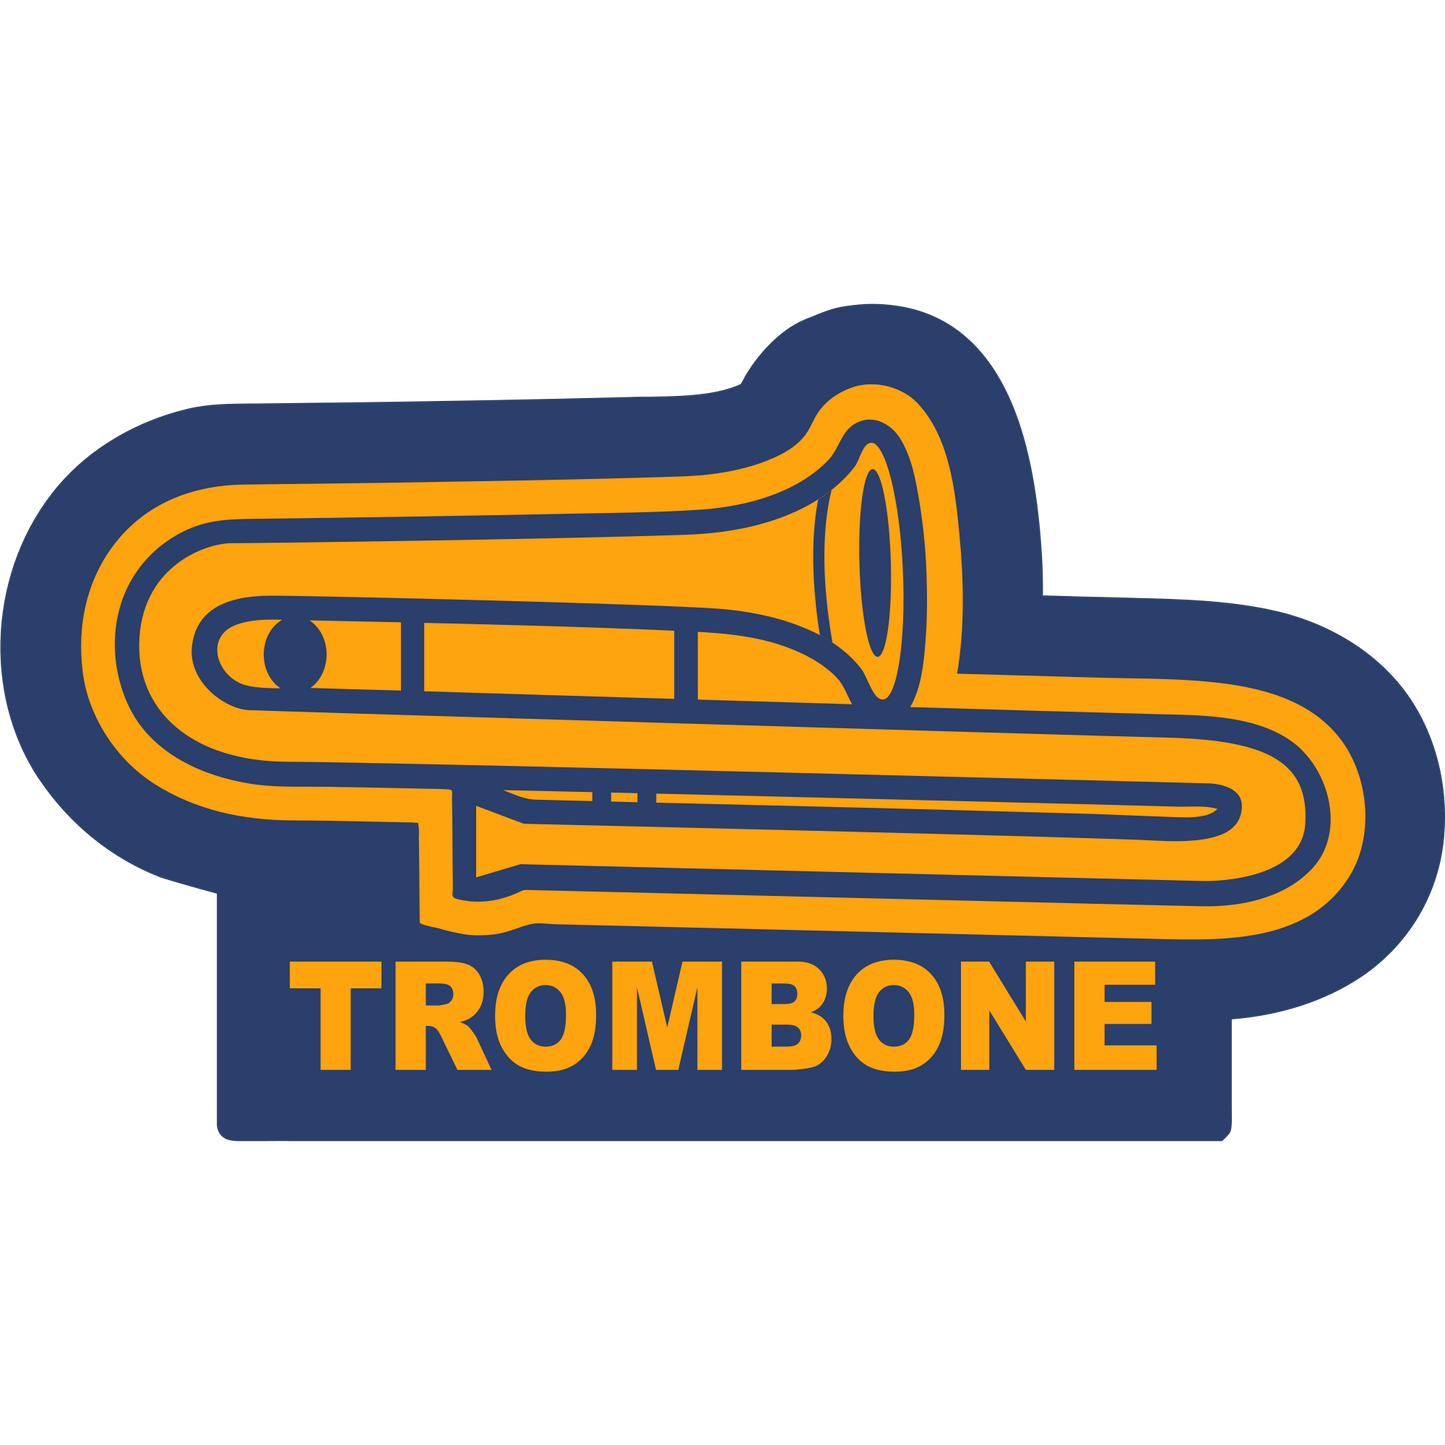 TROMB - Trombone Sleeve Patch